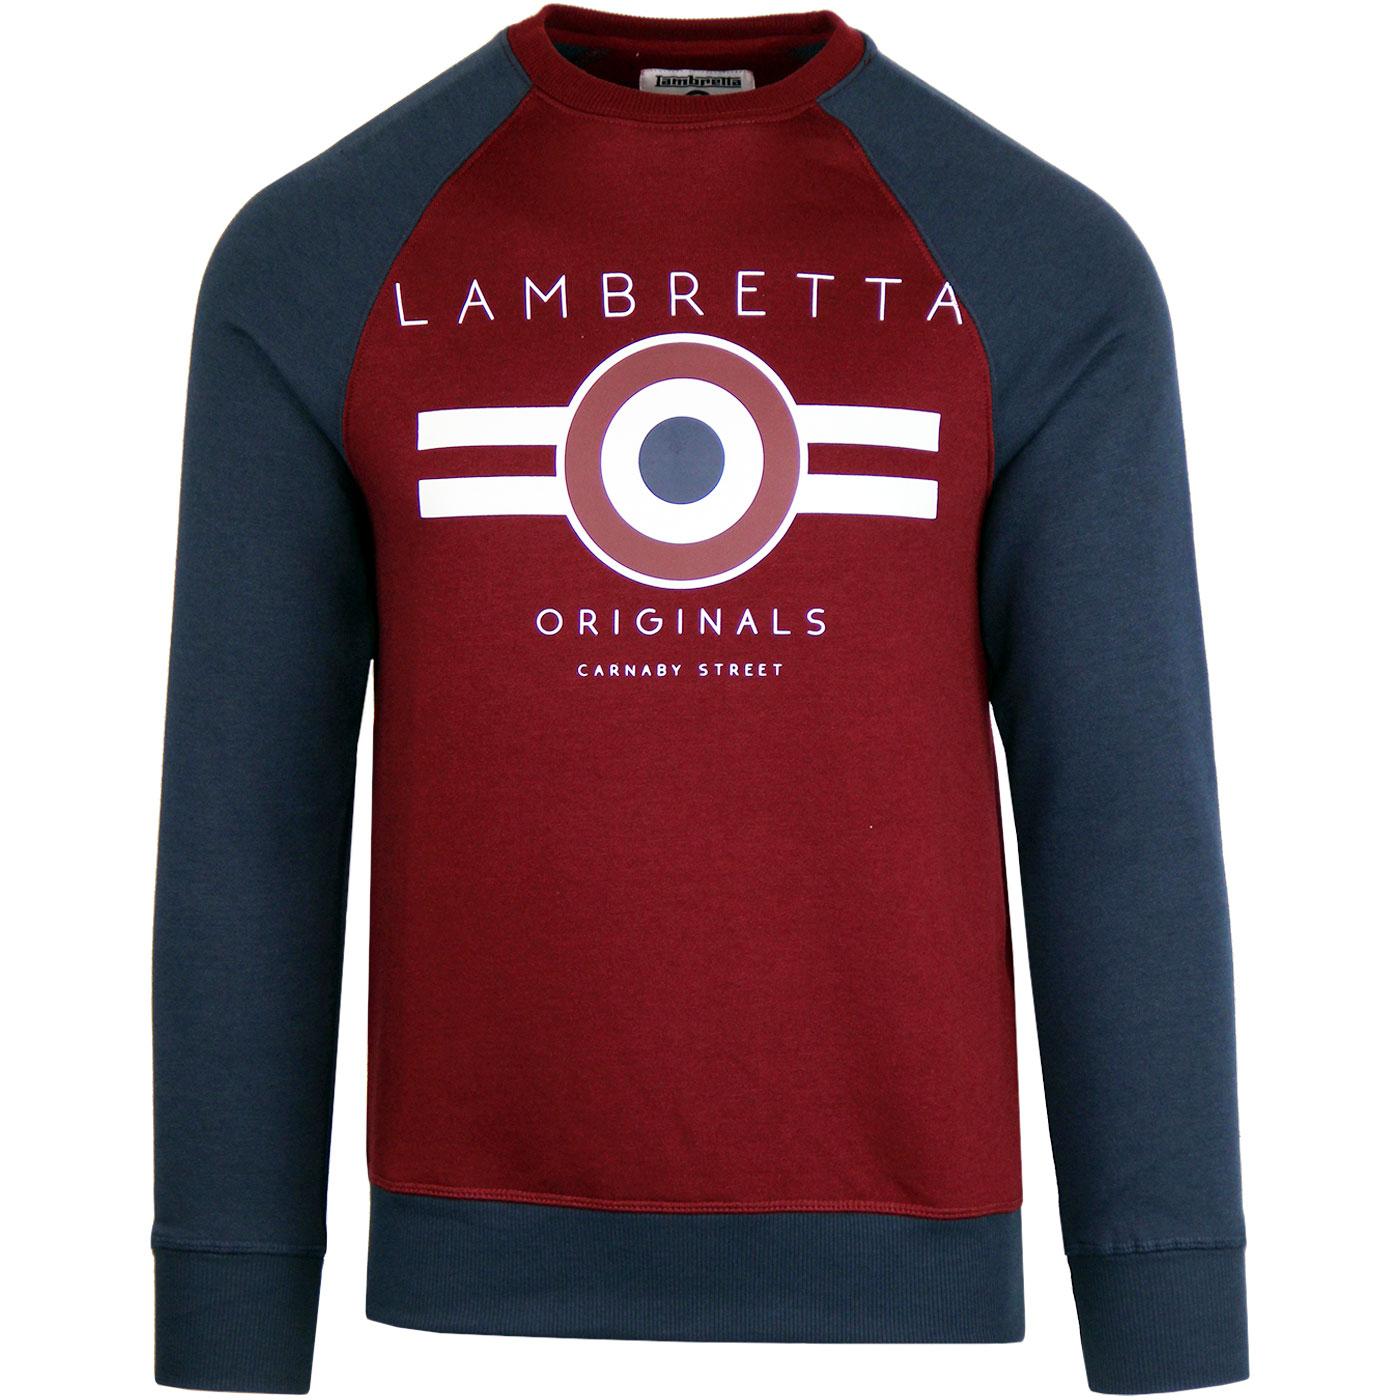 Womens Sweater Vespa Lambretta jumper The Jam Simple Mod Target Scooter Mens